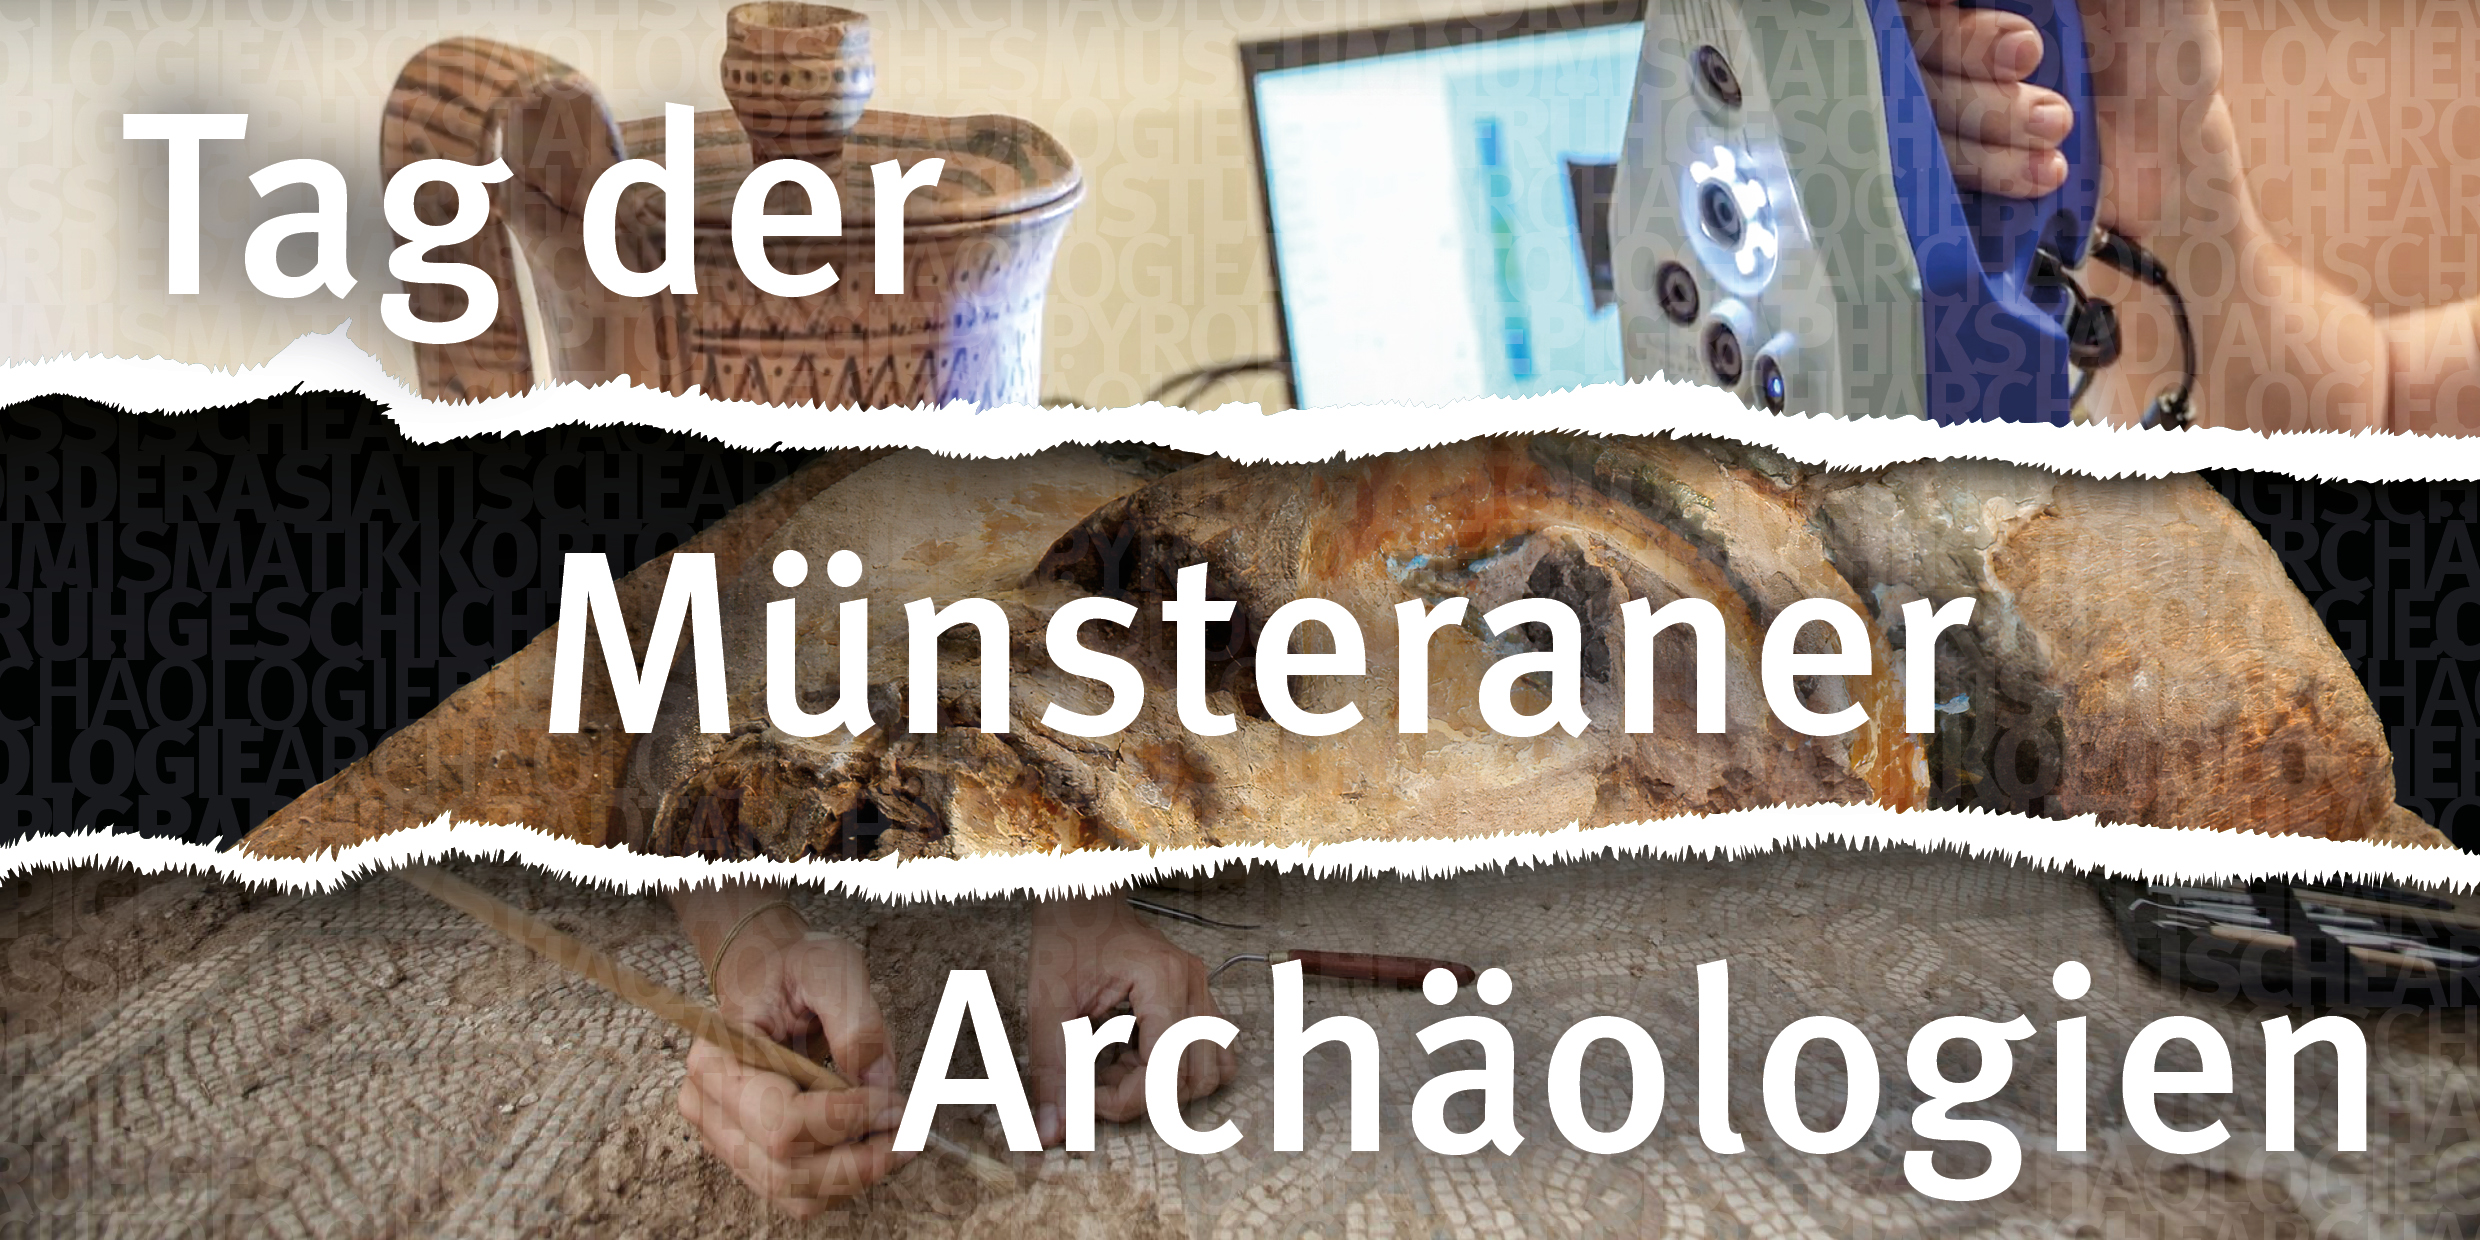 Tag der Münsteraner Archäologien am 4. Mai